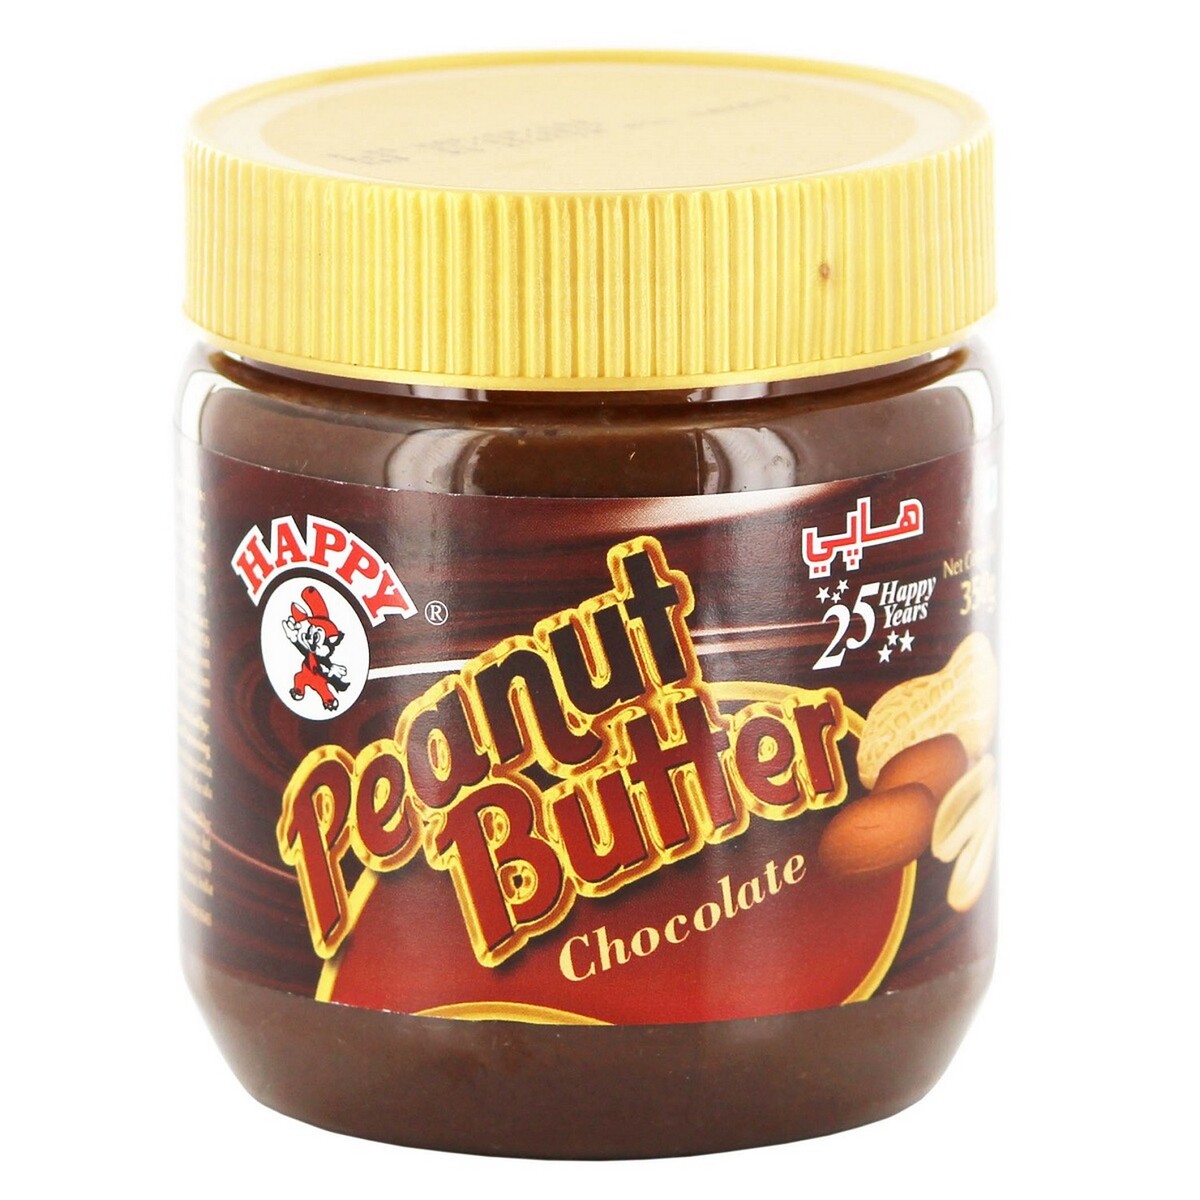 Happy Peanut Butter Chocolate 350g